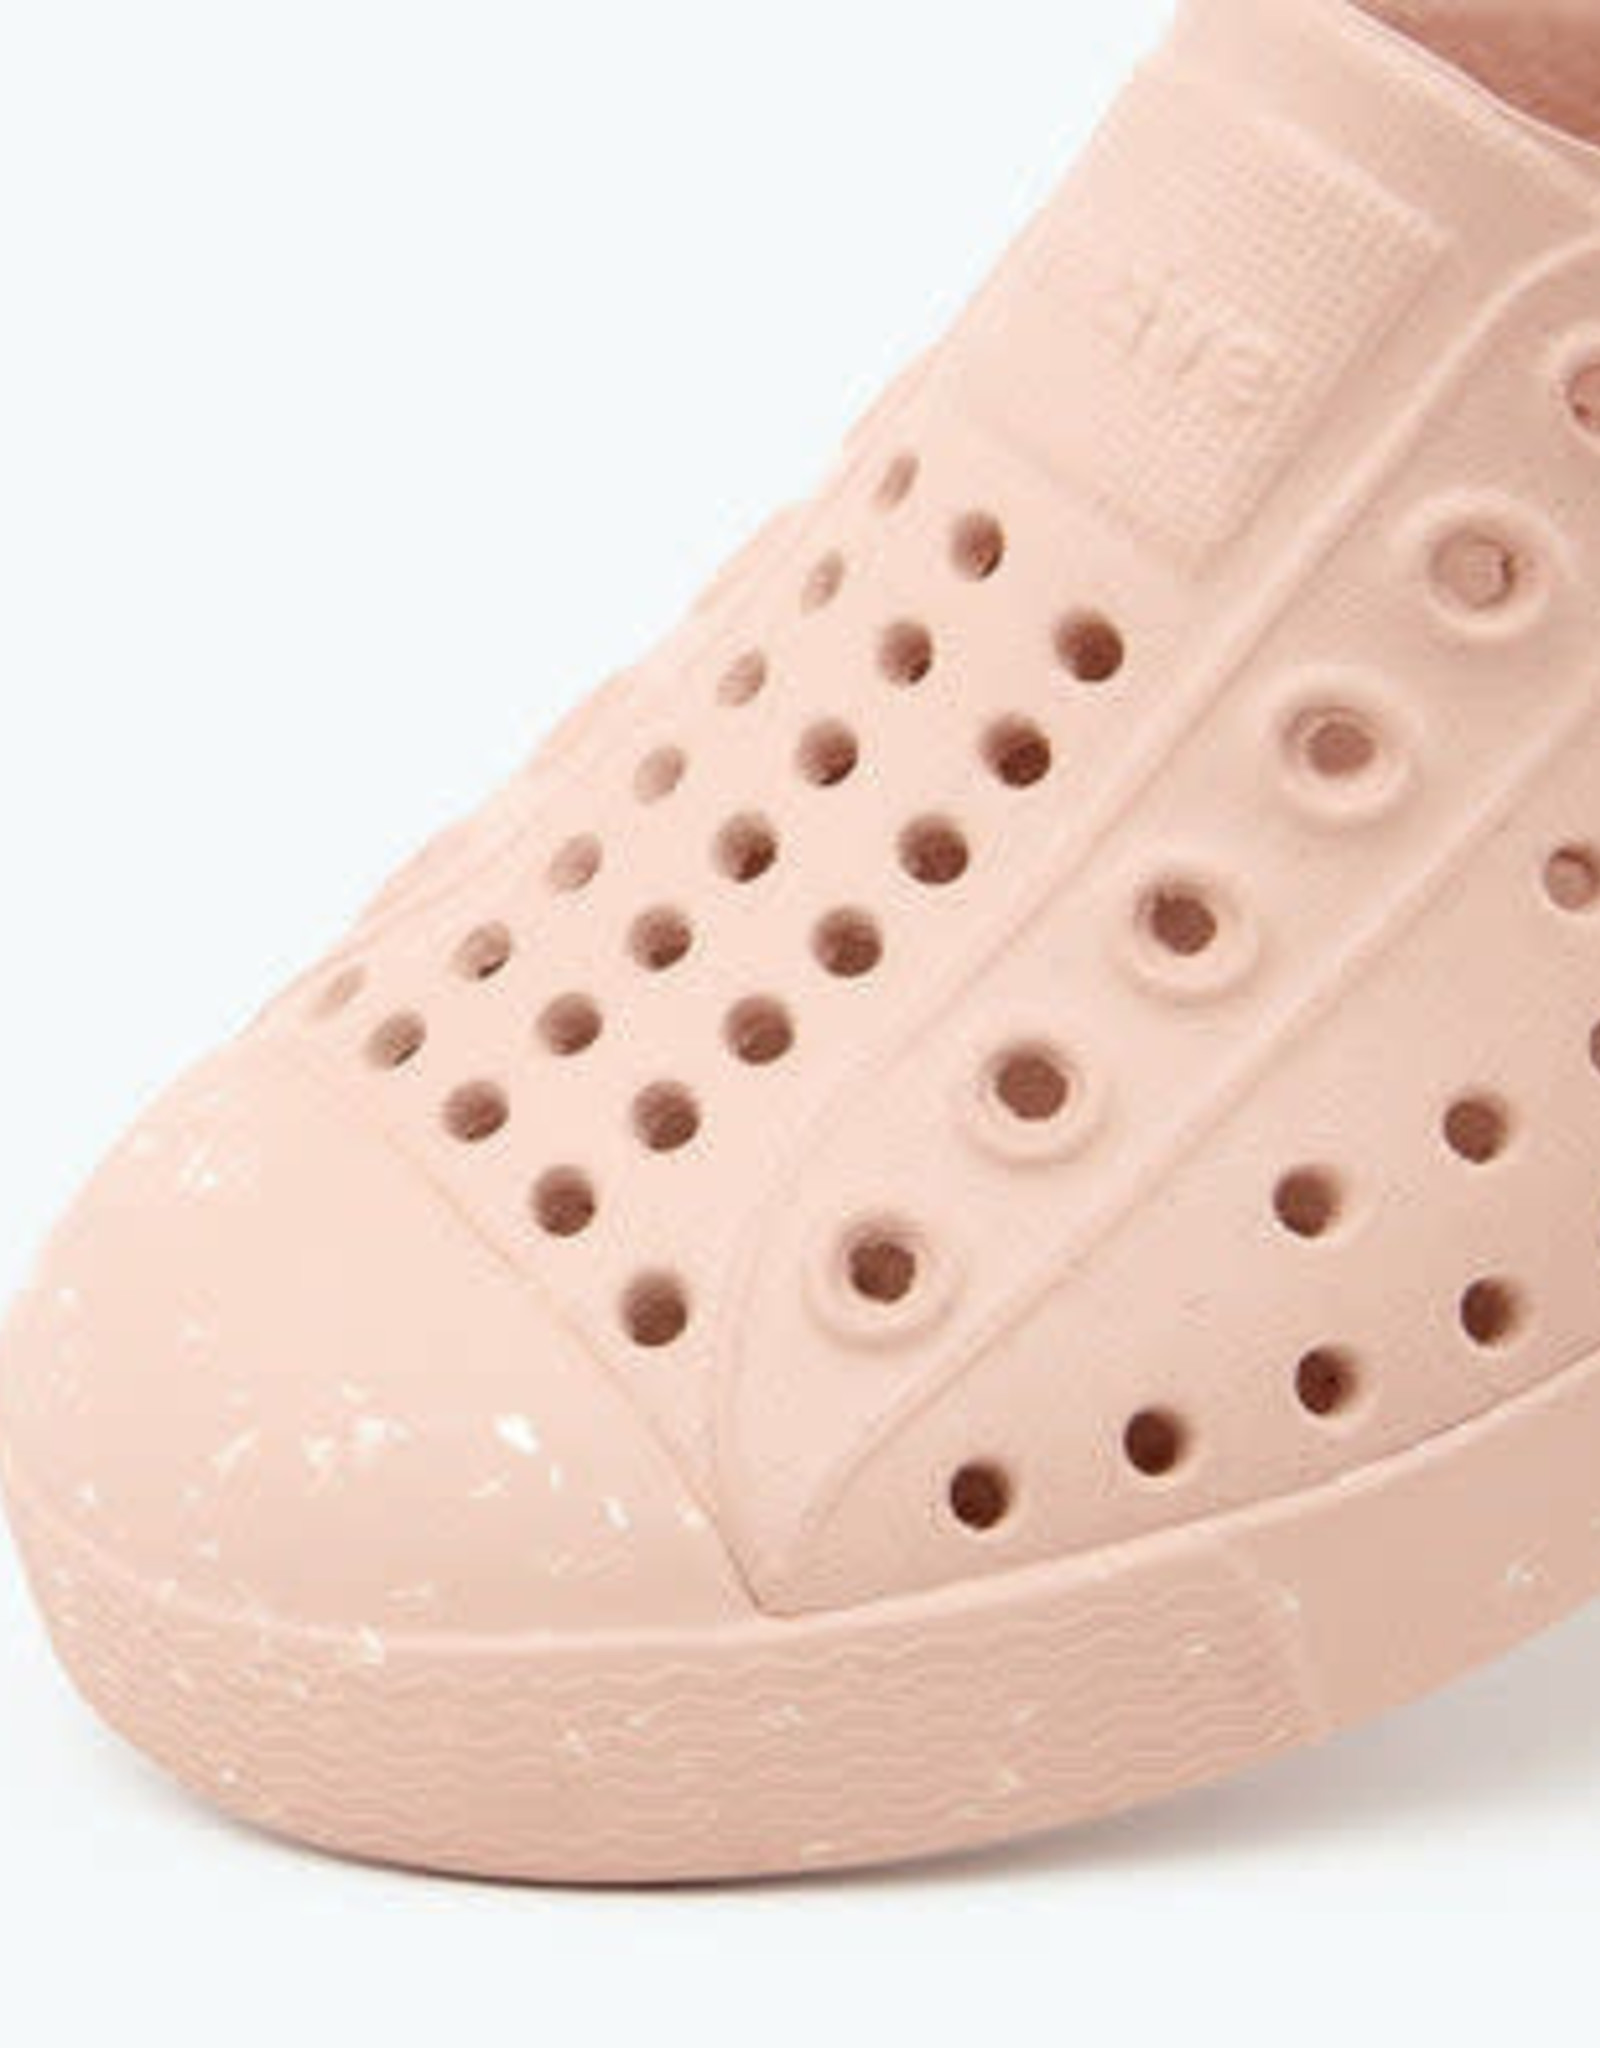 Native Shoes Jefferson Bloom in Chameleon Pink/Pink Speckles